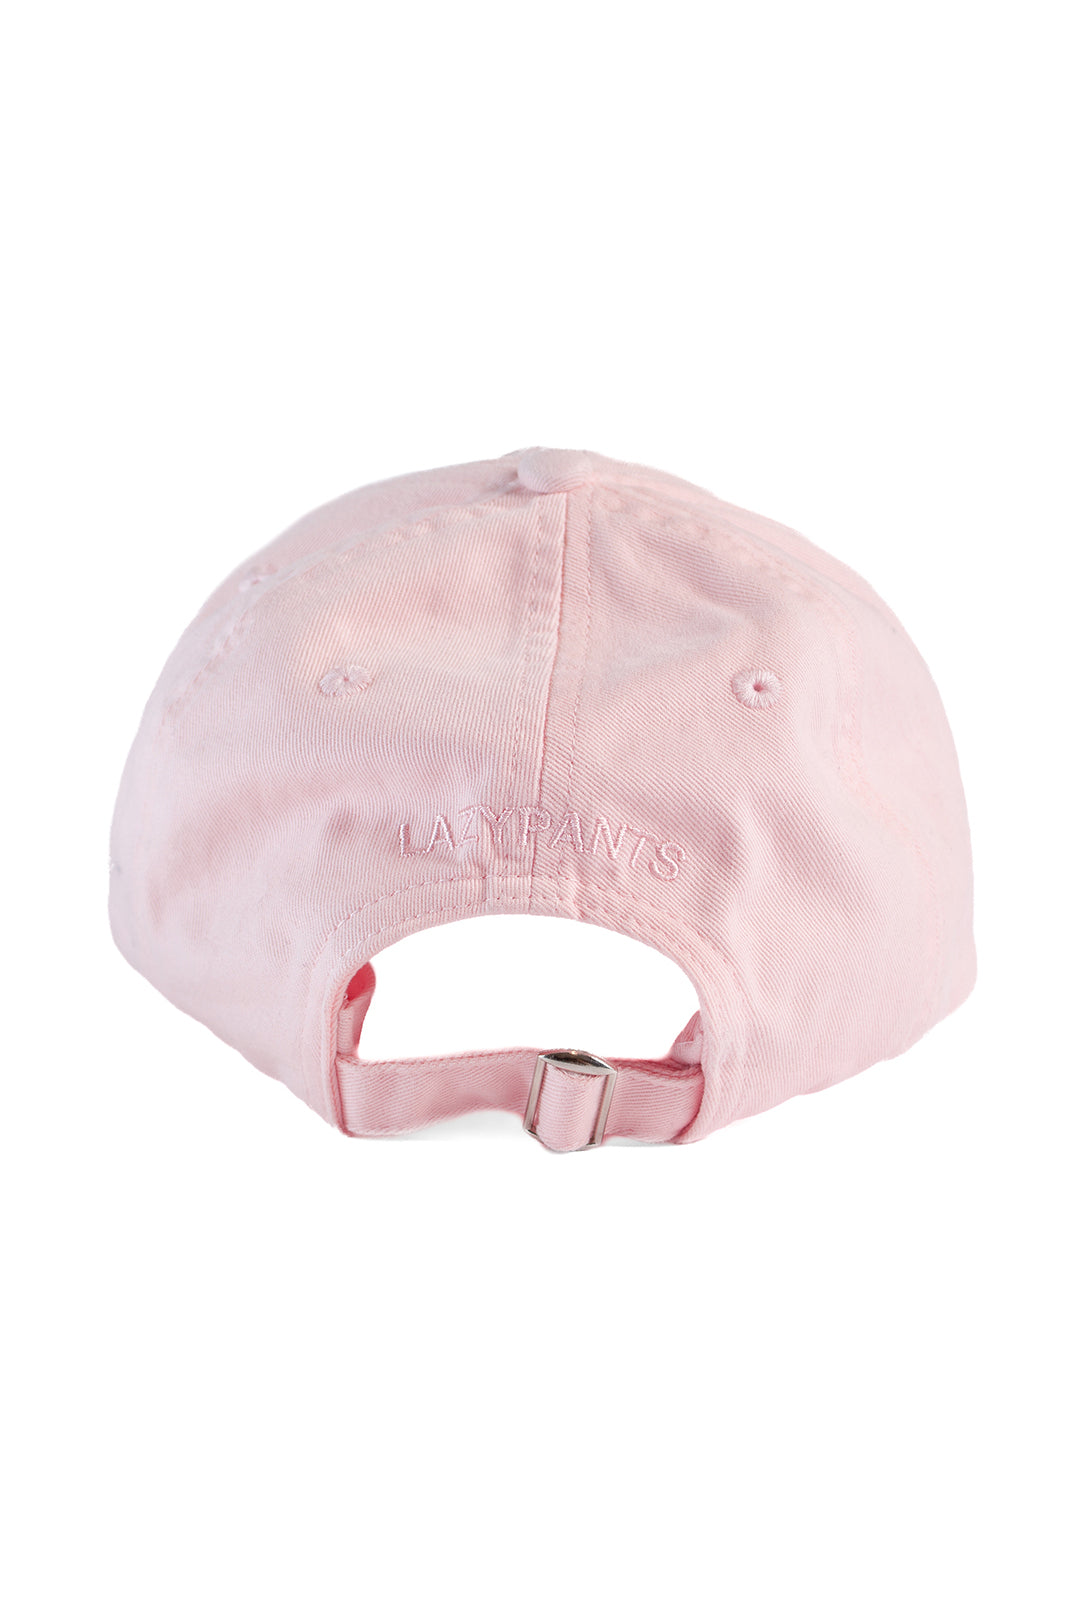 Washed cotton twill dad’s baseball cap in bubblegum